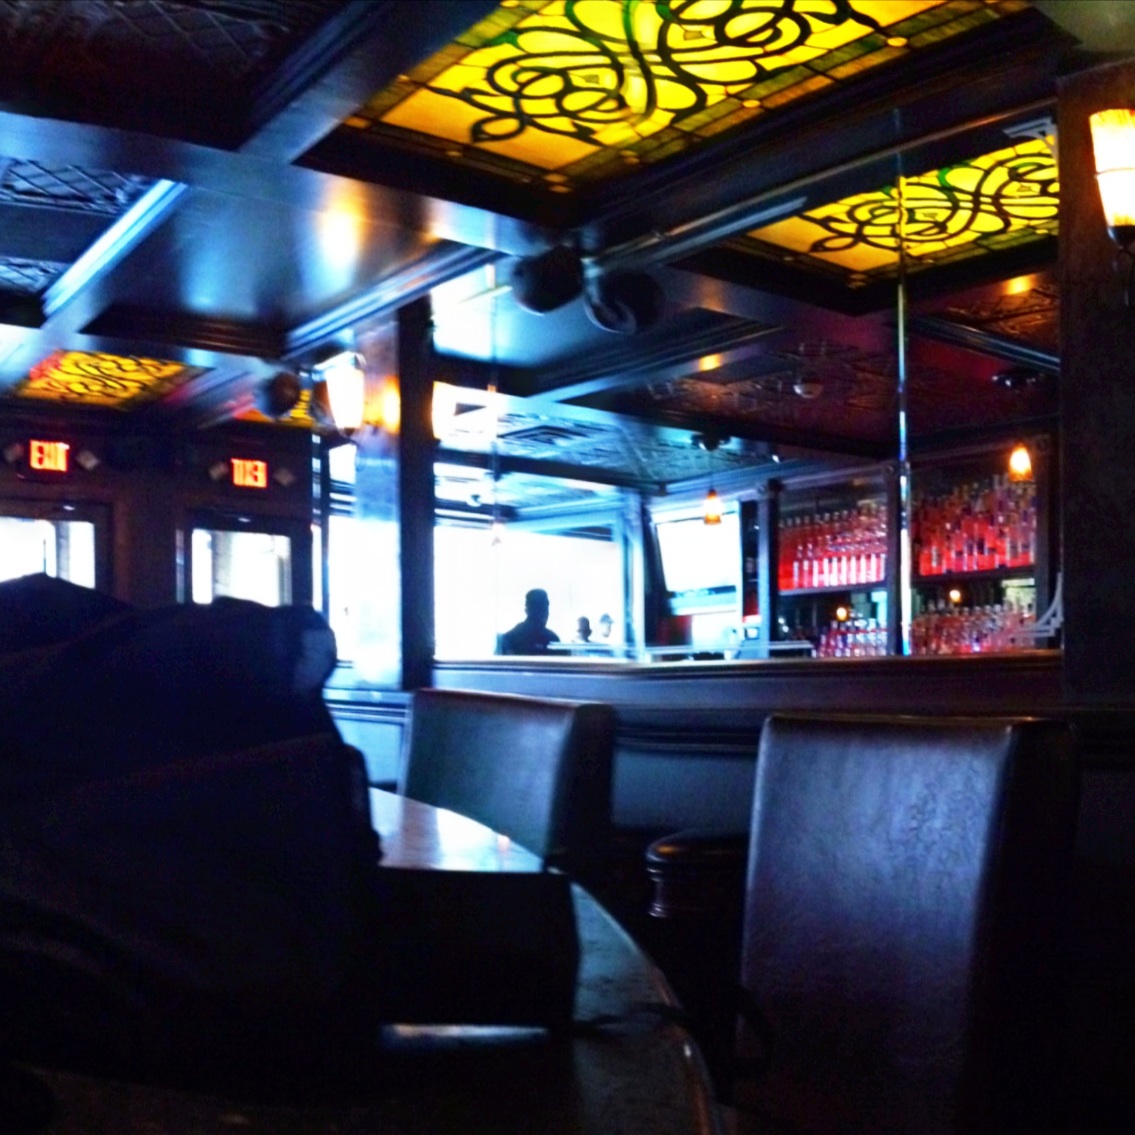  Photograph of bright bar interior. 